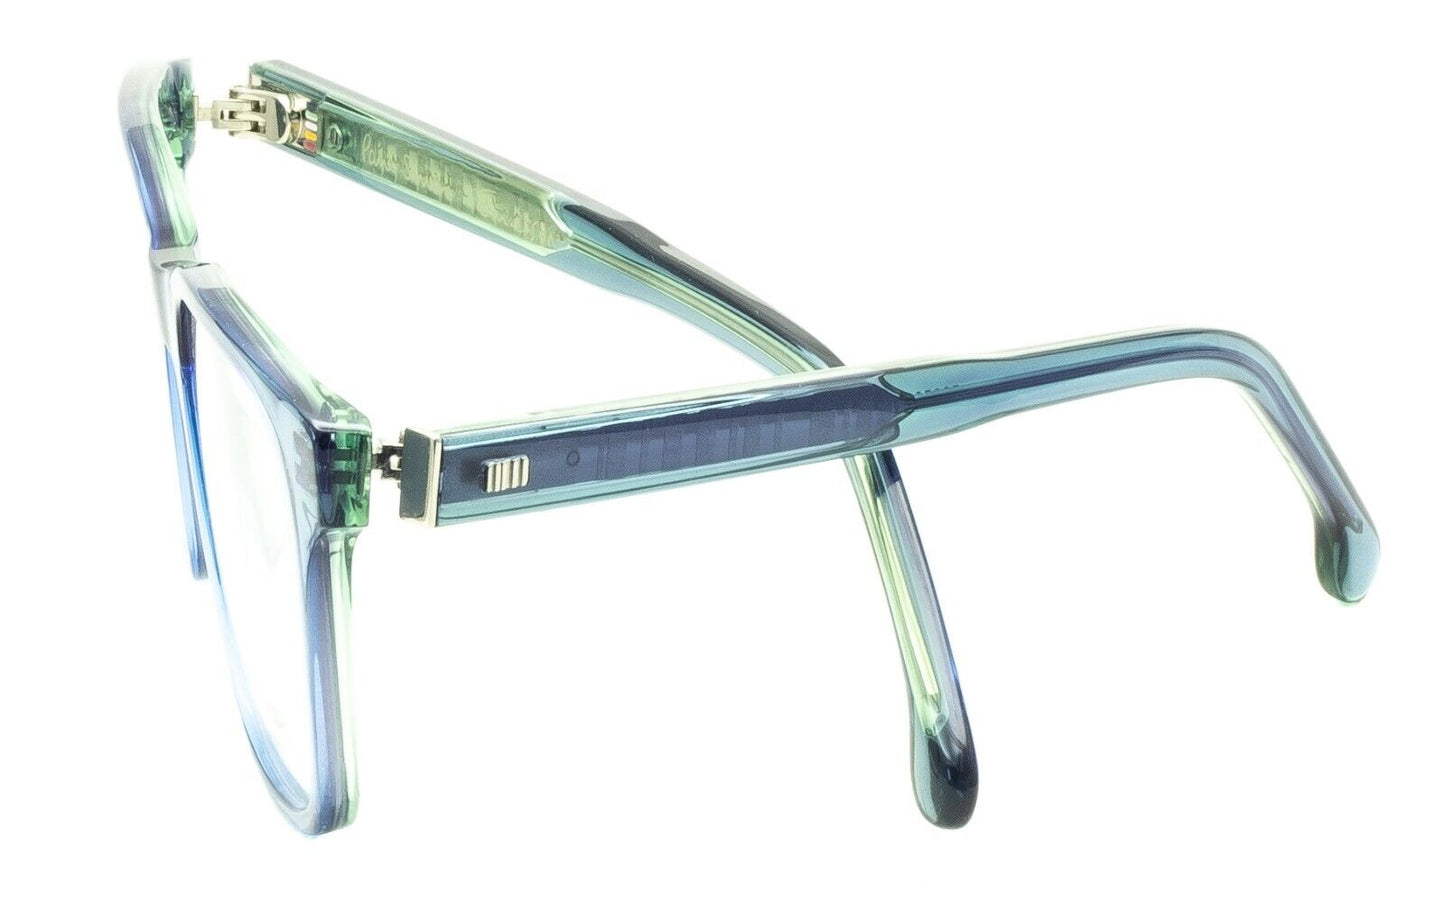 PAUL SMITH PSOP061 03 EMERSON Eyewear FRAMES RX Optical Glasses Eyeglasses - New